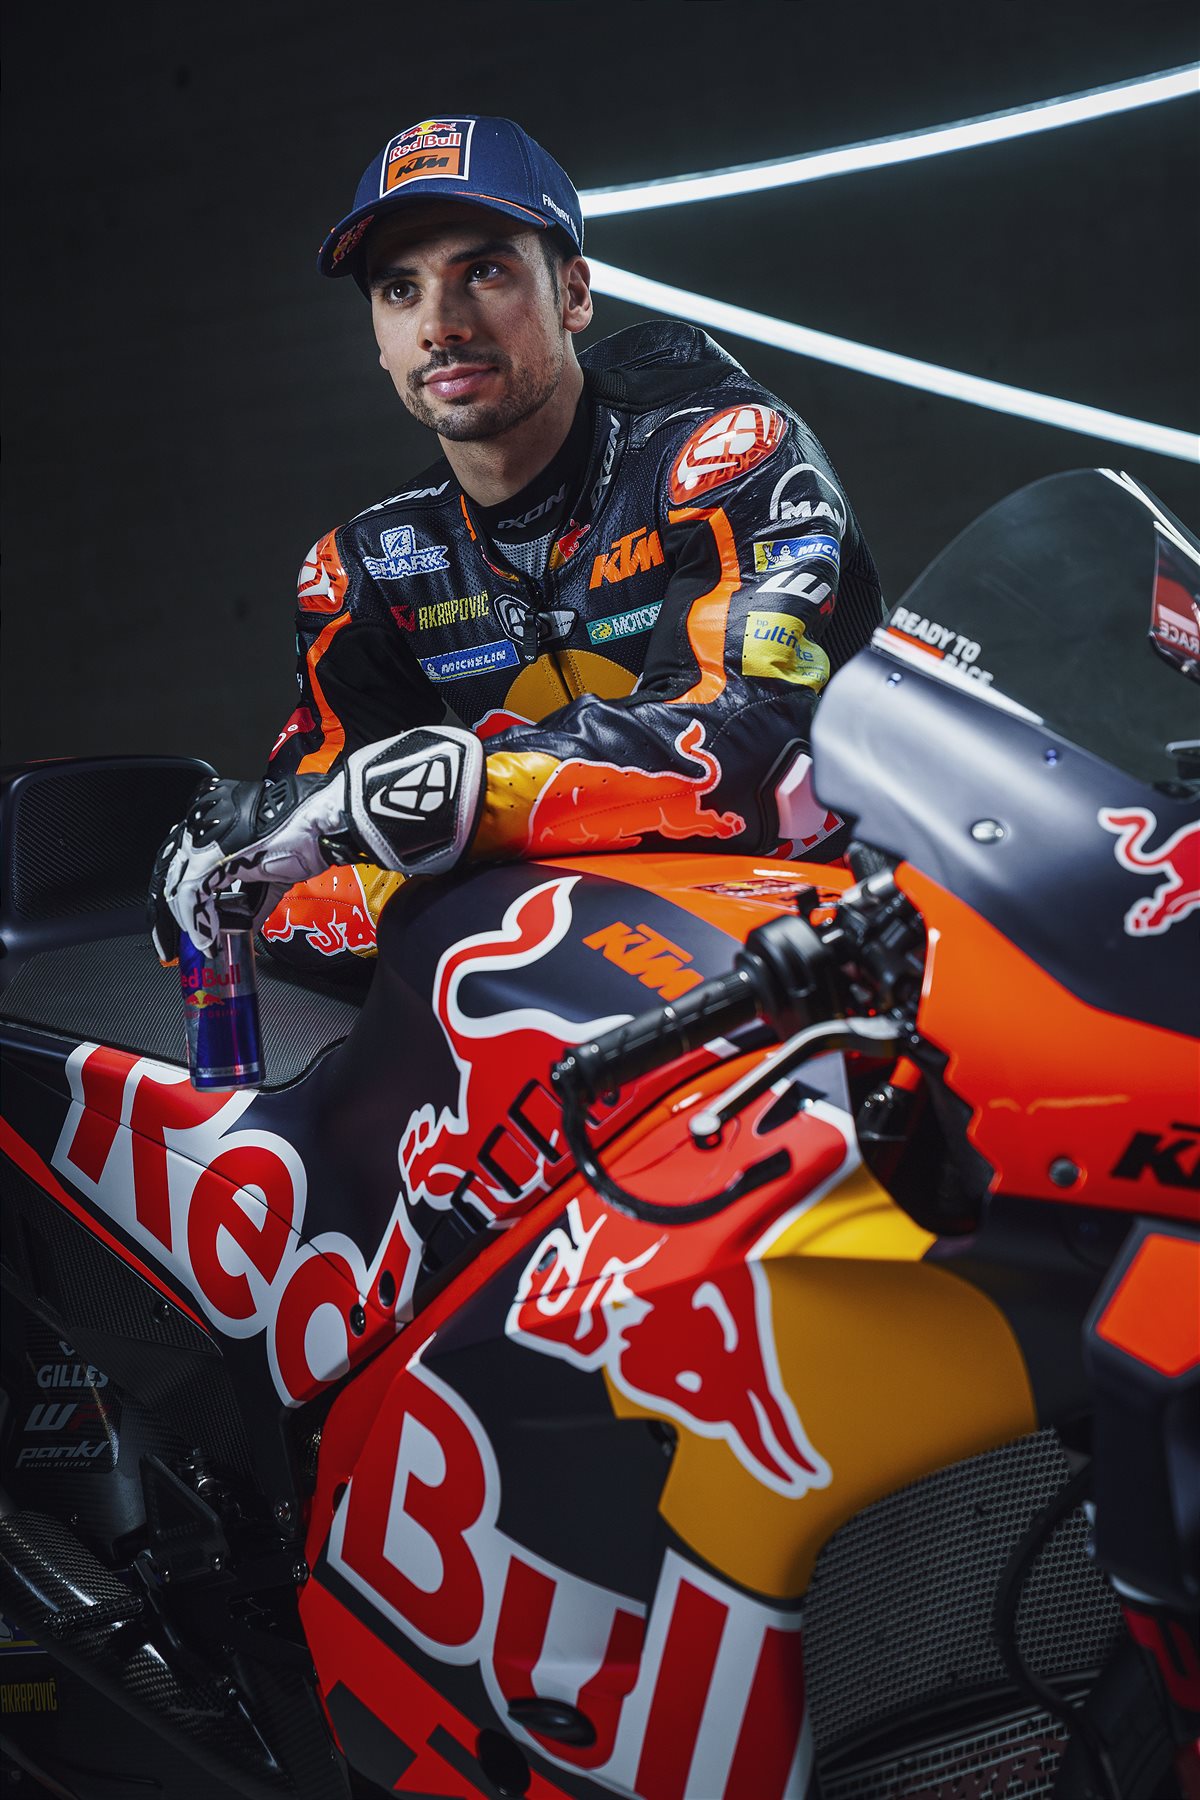 2022 MotoGP launch Miguel Oliveira